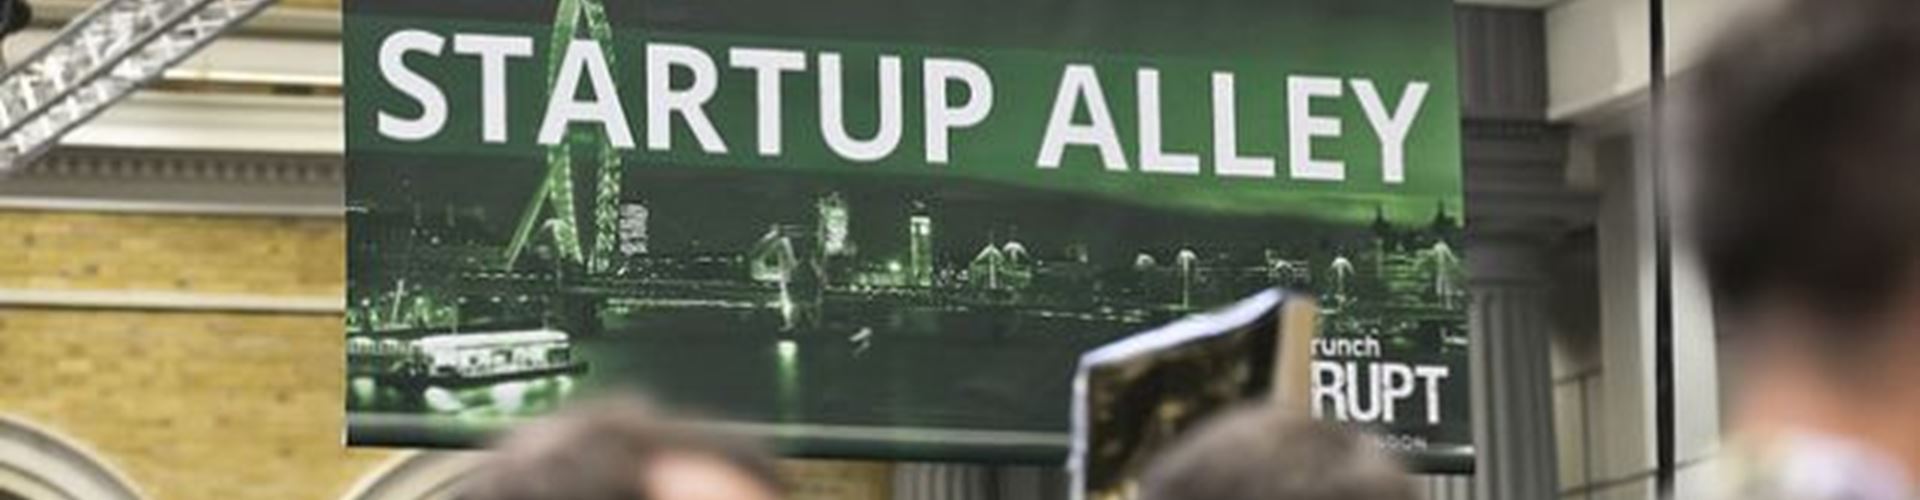 Europe’s top tech startups showcase talent in London